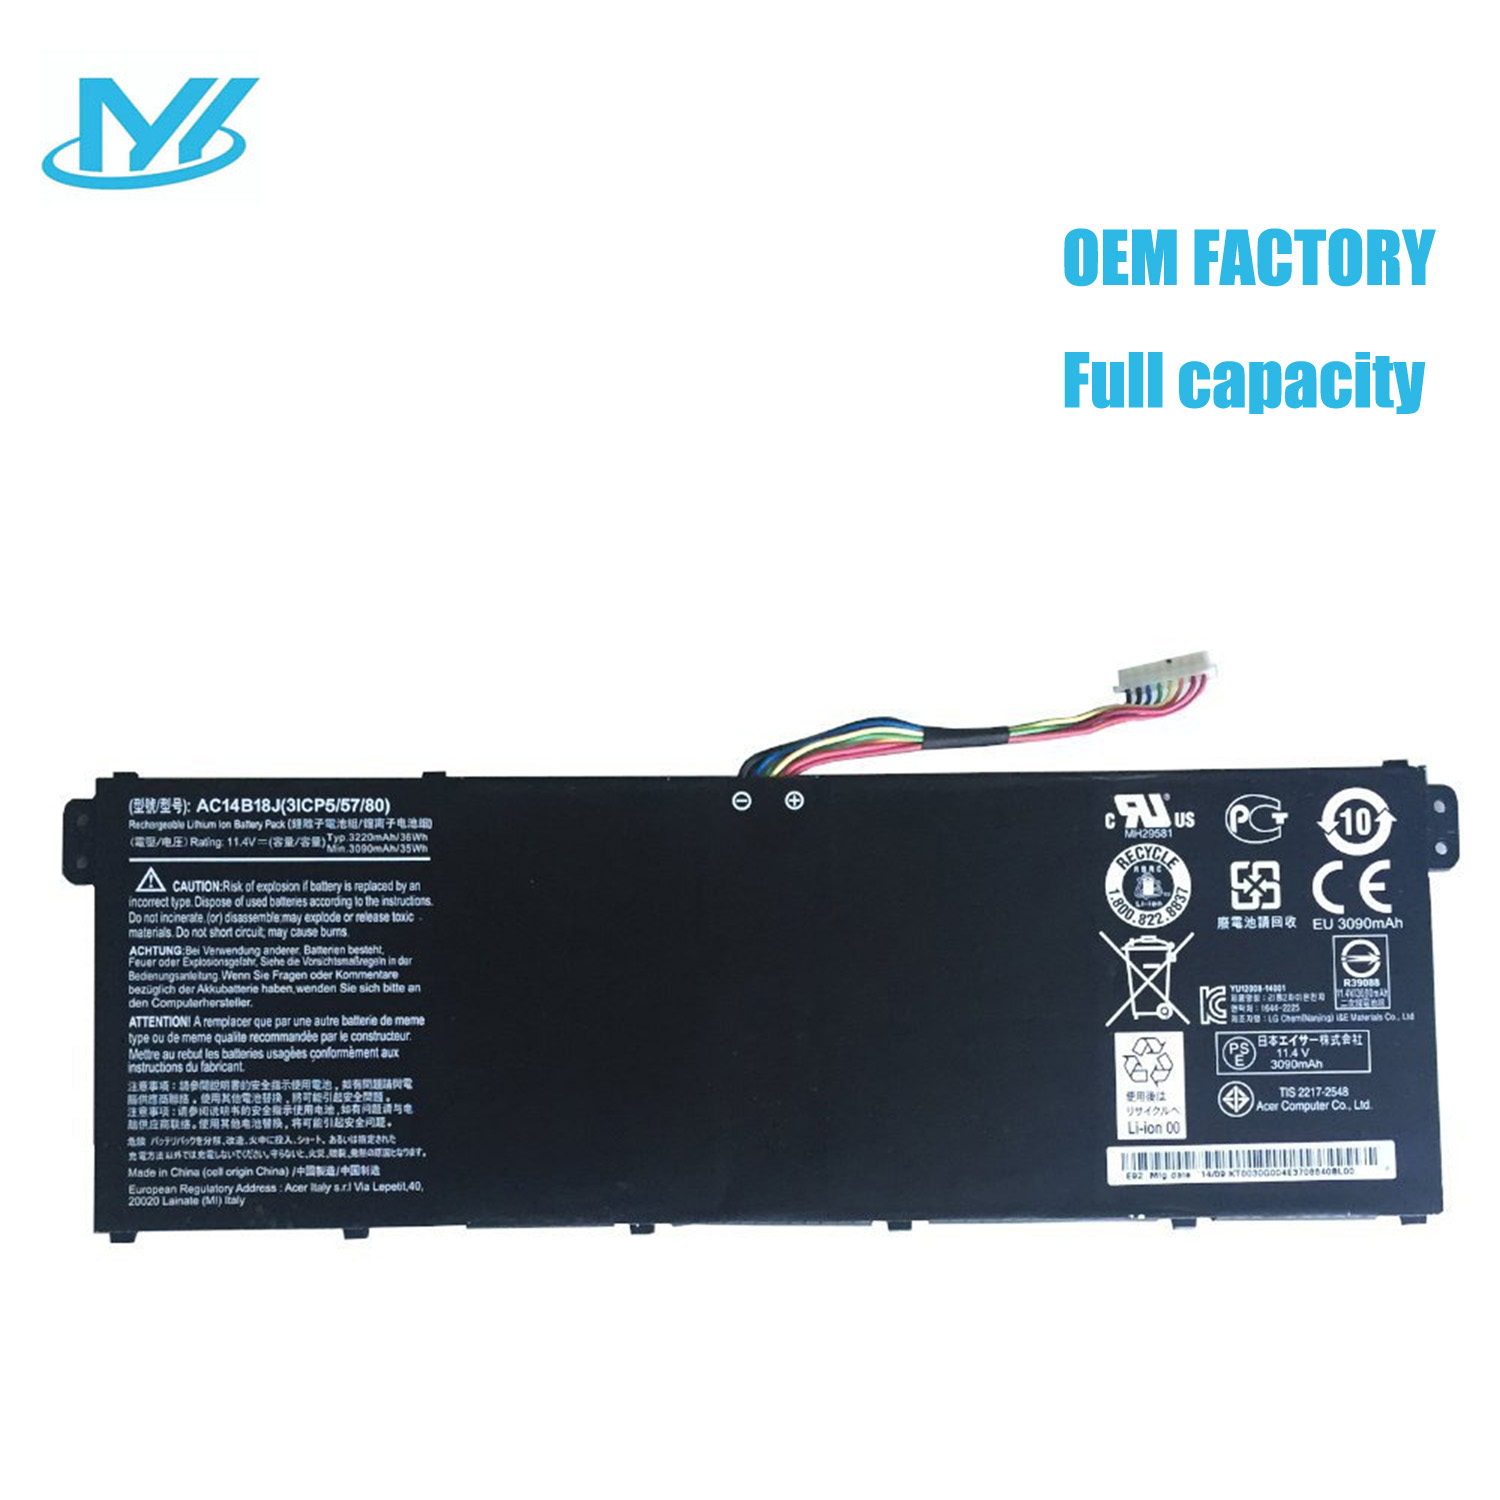 Best Seller OEM Manufacturer laptop battery lithium ion batteries AC14B18J for Acer V3-372-77FS P47B 557T 57NM V3-371-30FA Aspire E3-111